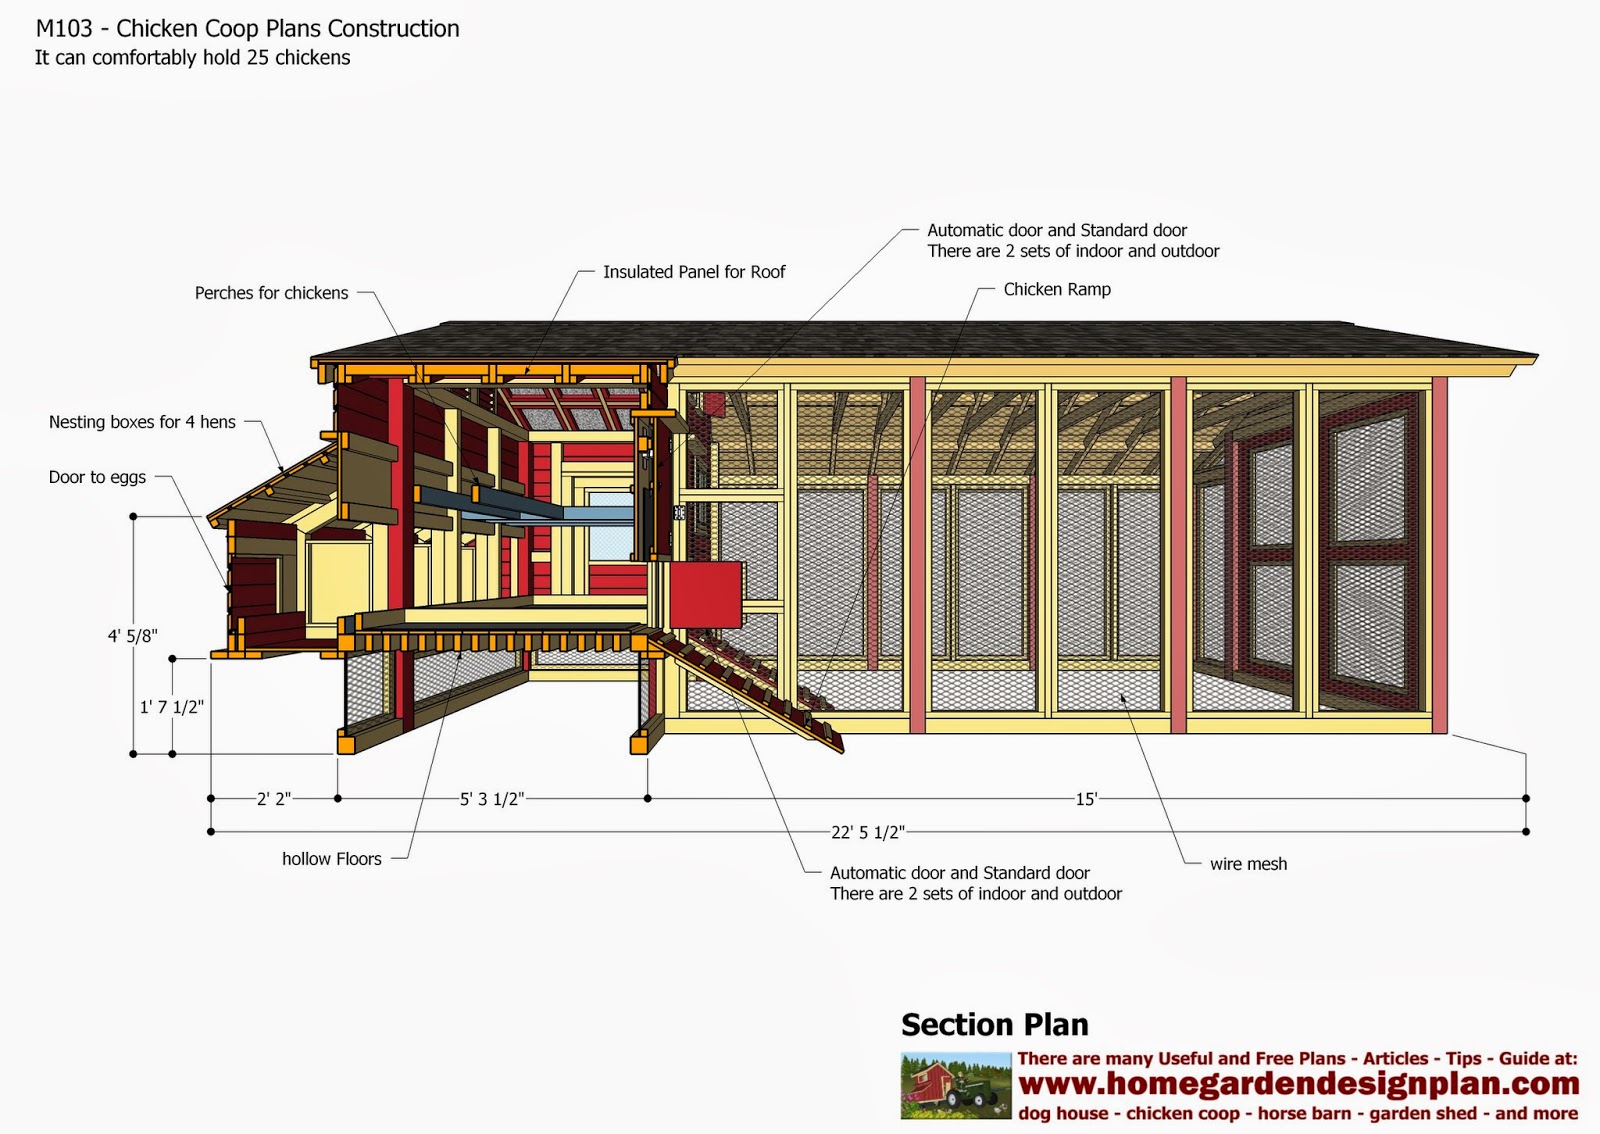 Complete Free chicken coop designs .pdf - 0.6.2+ +M103+ +chicken+coop+plans+free+ +chicken+coop+Design+free+ +chicken+coop+plans+construction